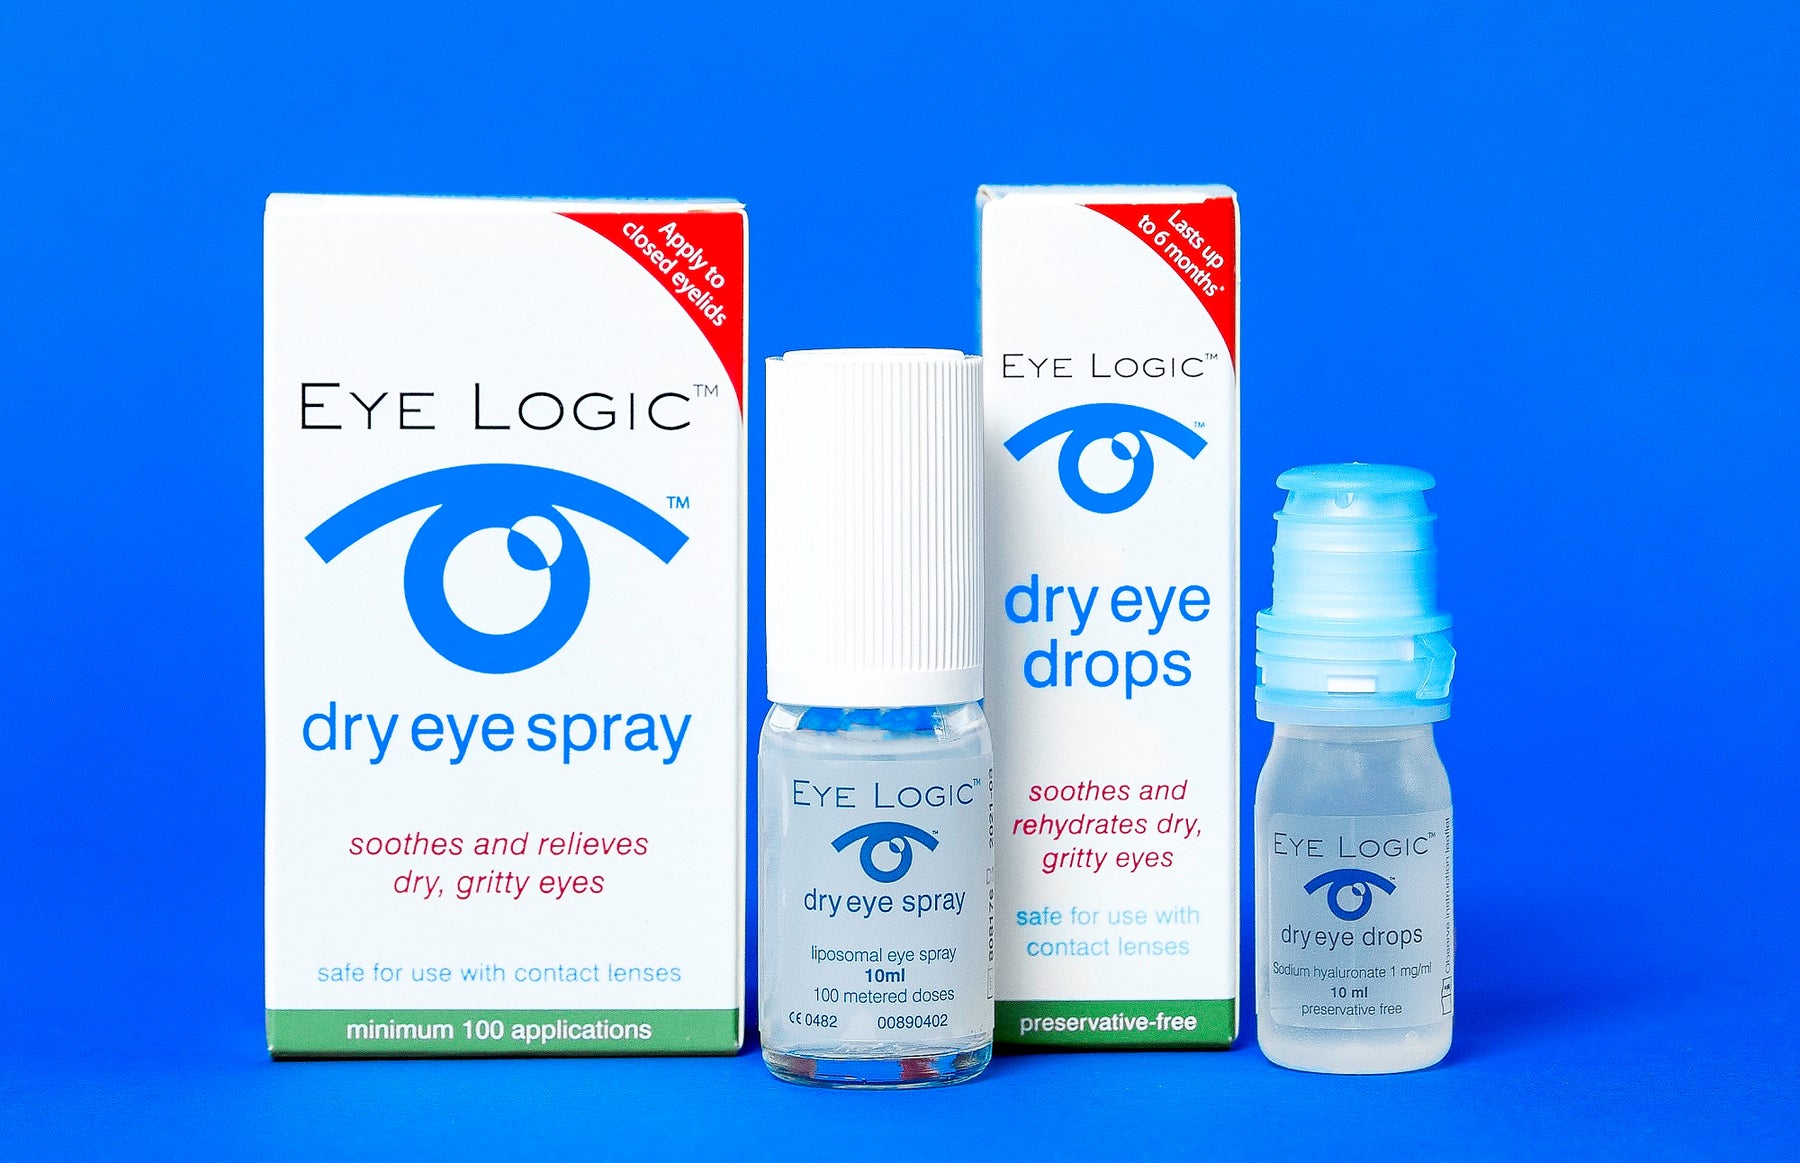 Eye Logic - The Optician’s Choice